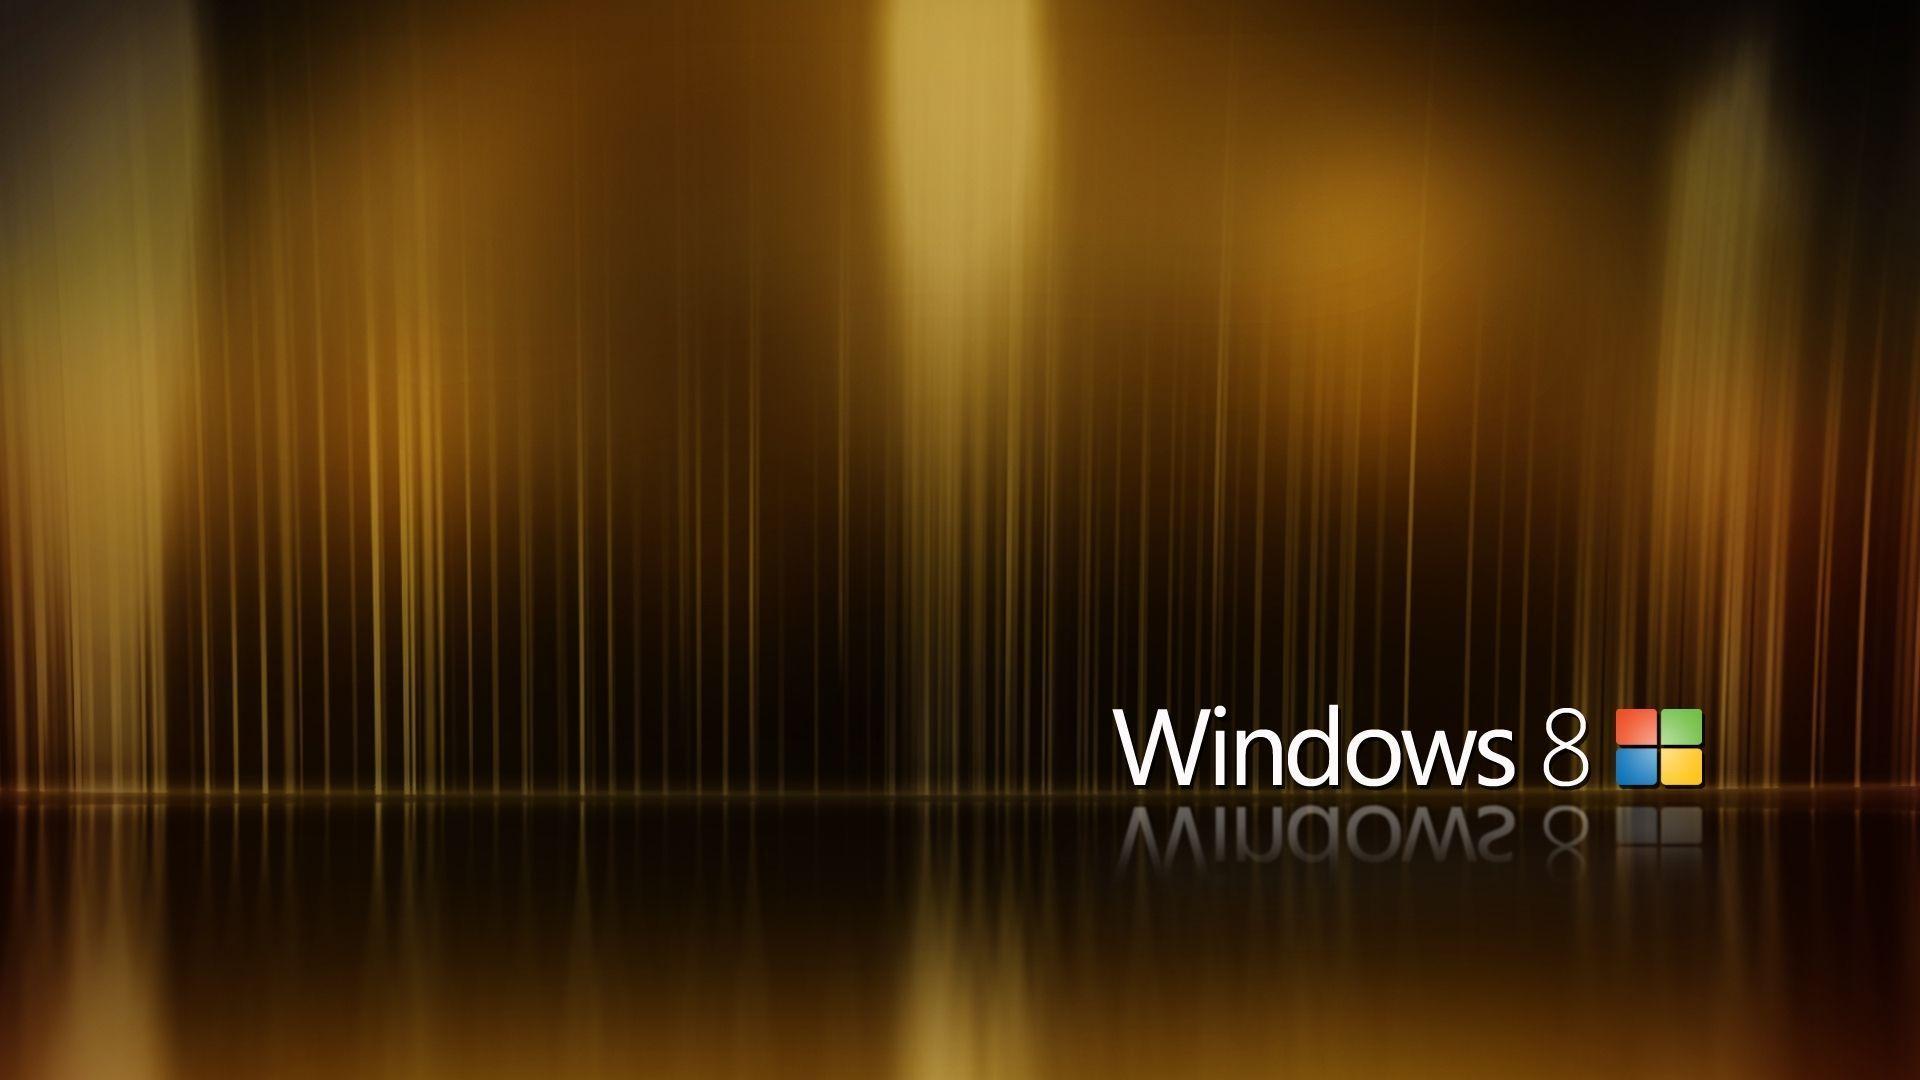 image For > Windows 8 Wallpaper 1920x1080